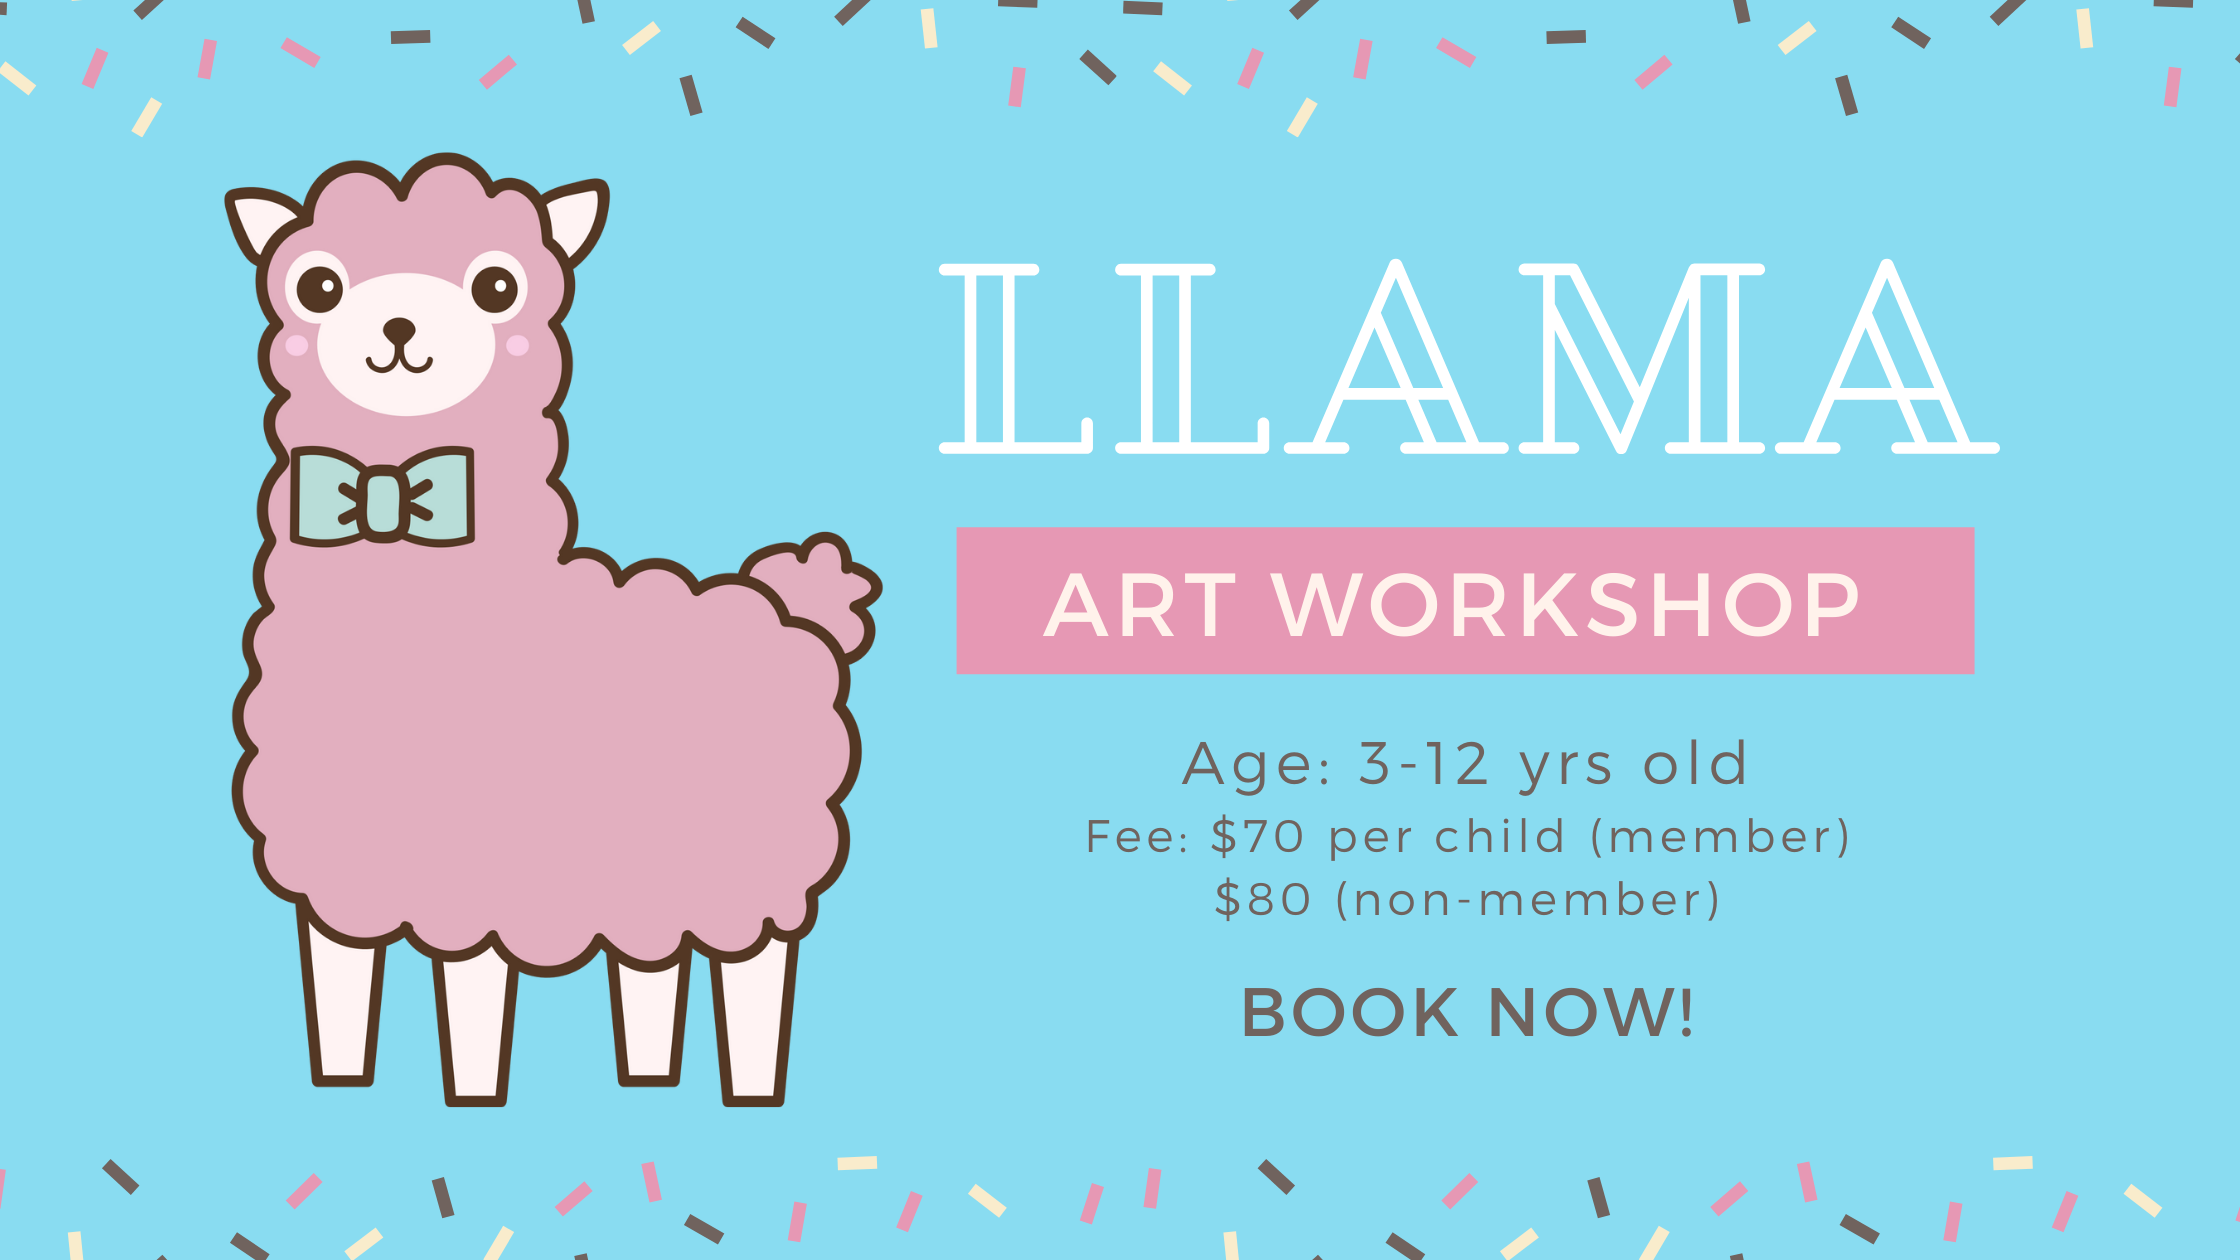 LLAMA Art Workshop for 3 -12 years old